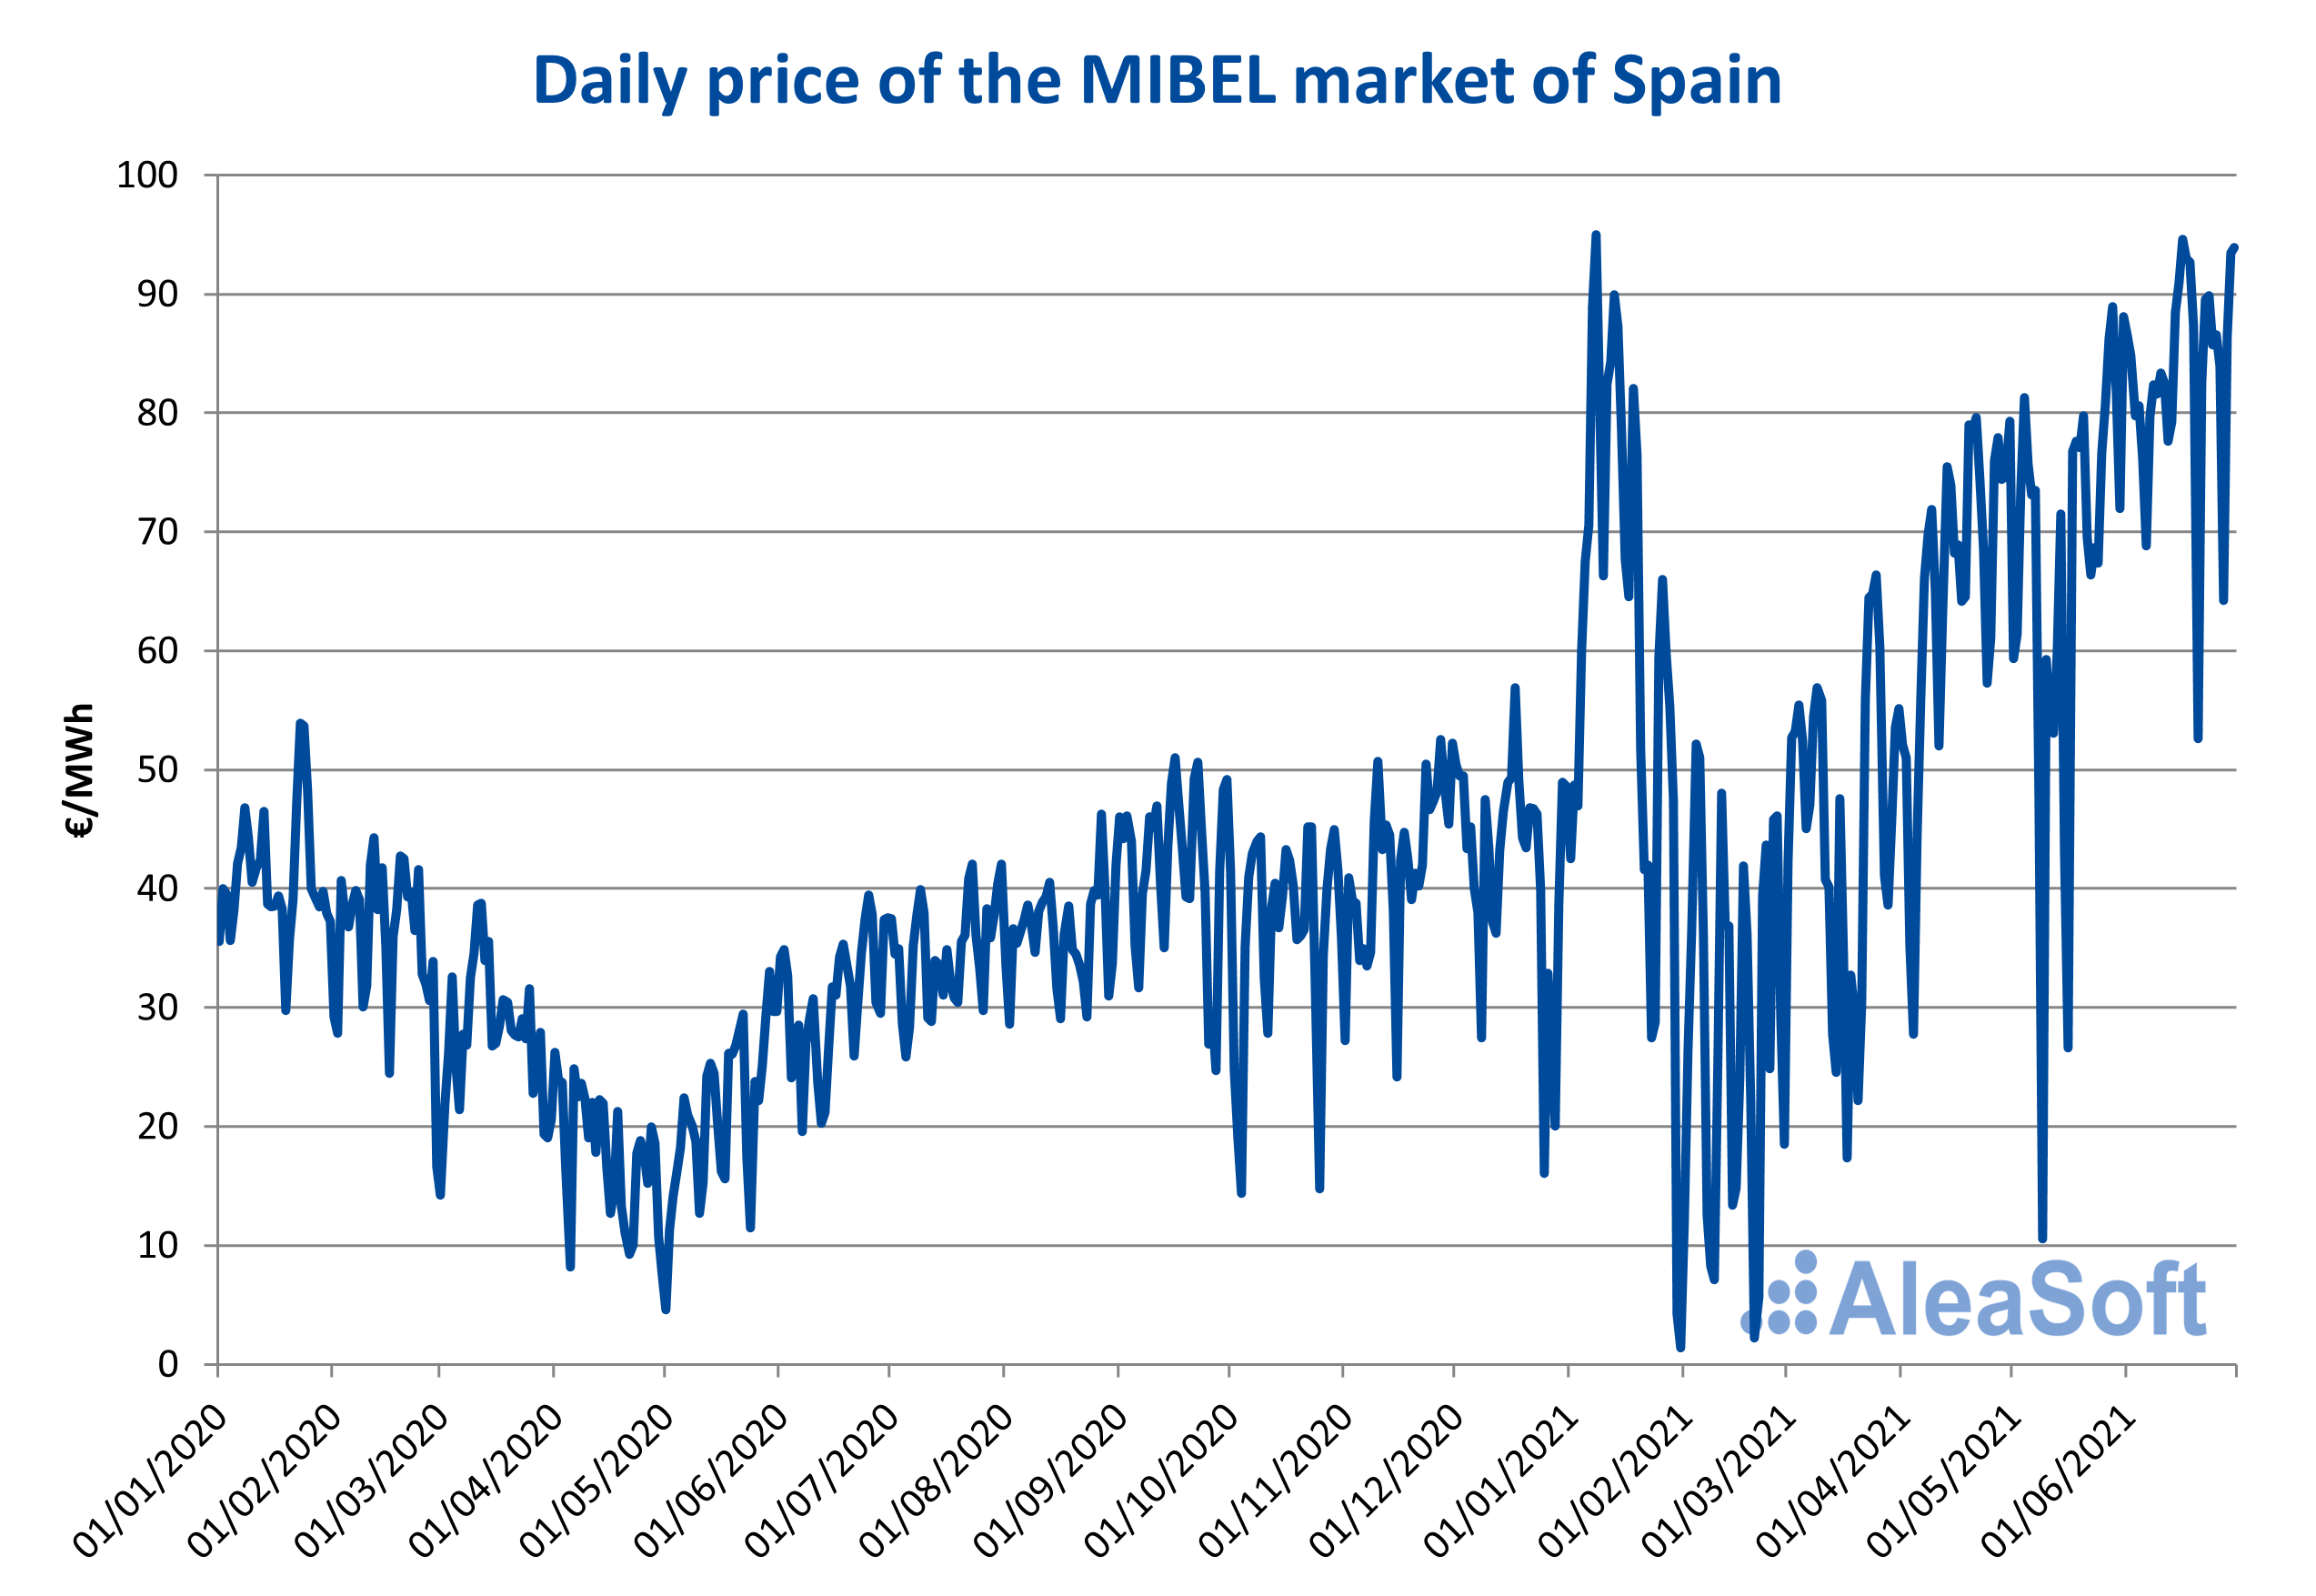 AleaSoft - Mibel Spain daily price